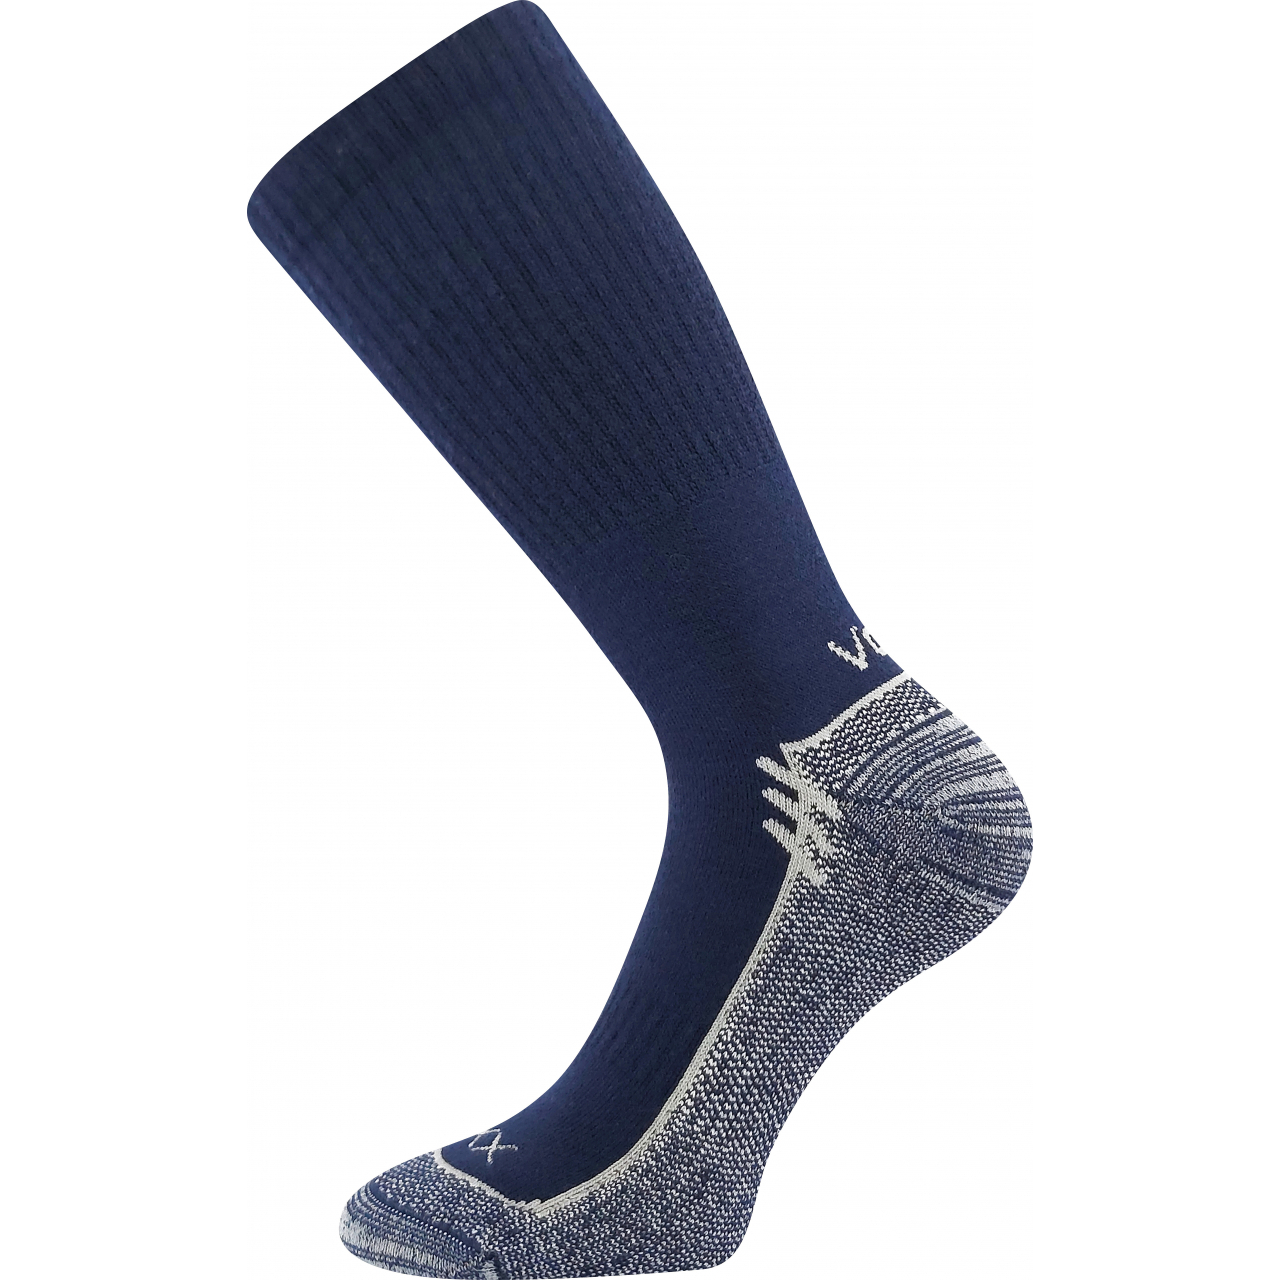 Ponožky trekingové unisex Voxx Phact - tmavě modré, 39-42